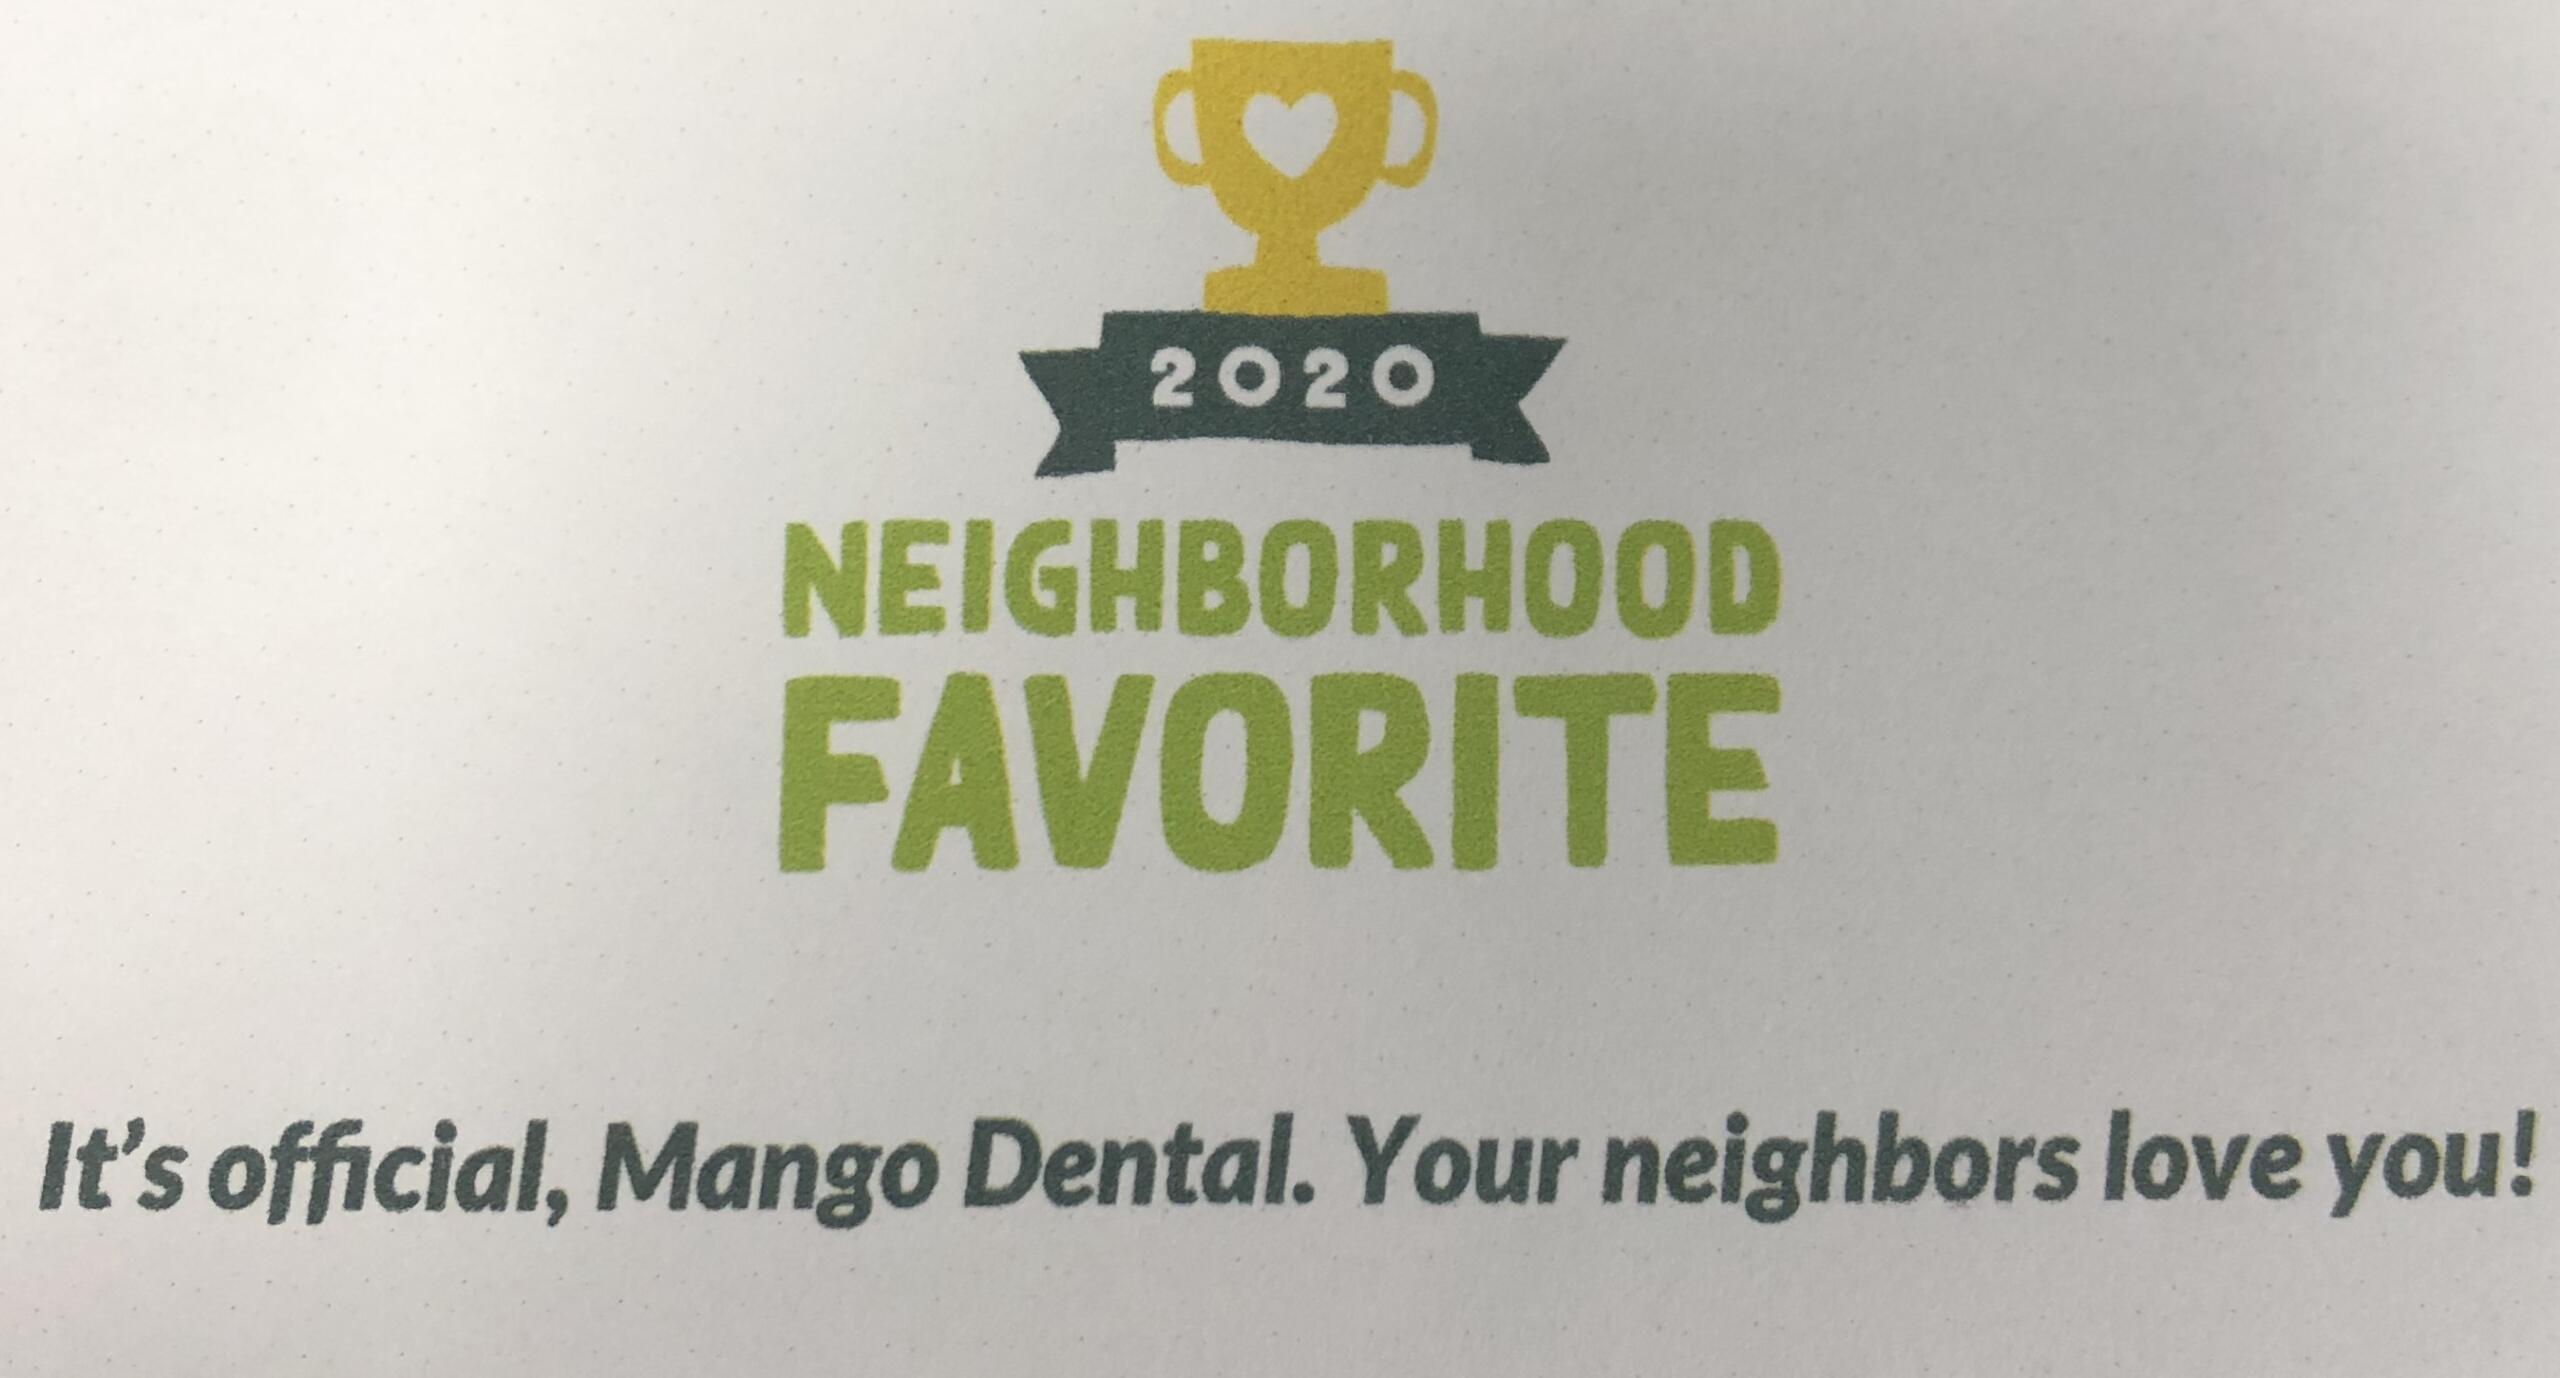 Next Door voted Mango Dental the neighborhood favorite best dentist in Greensboro, NC